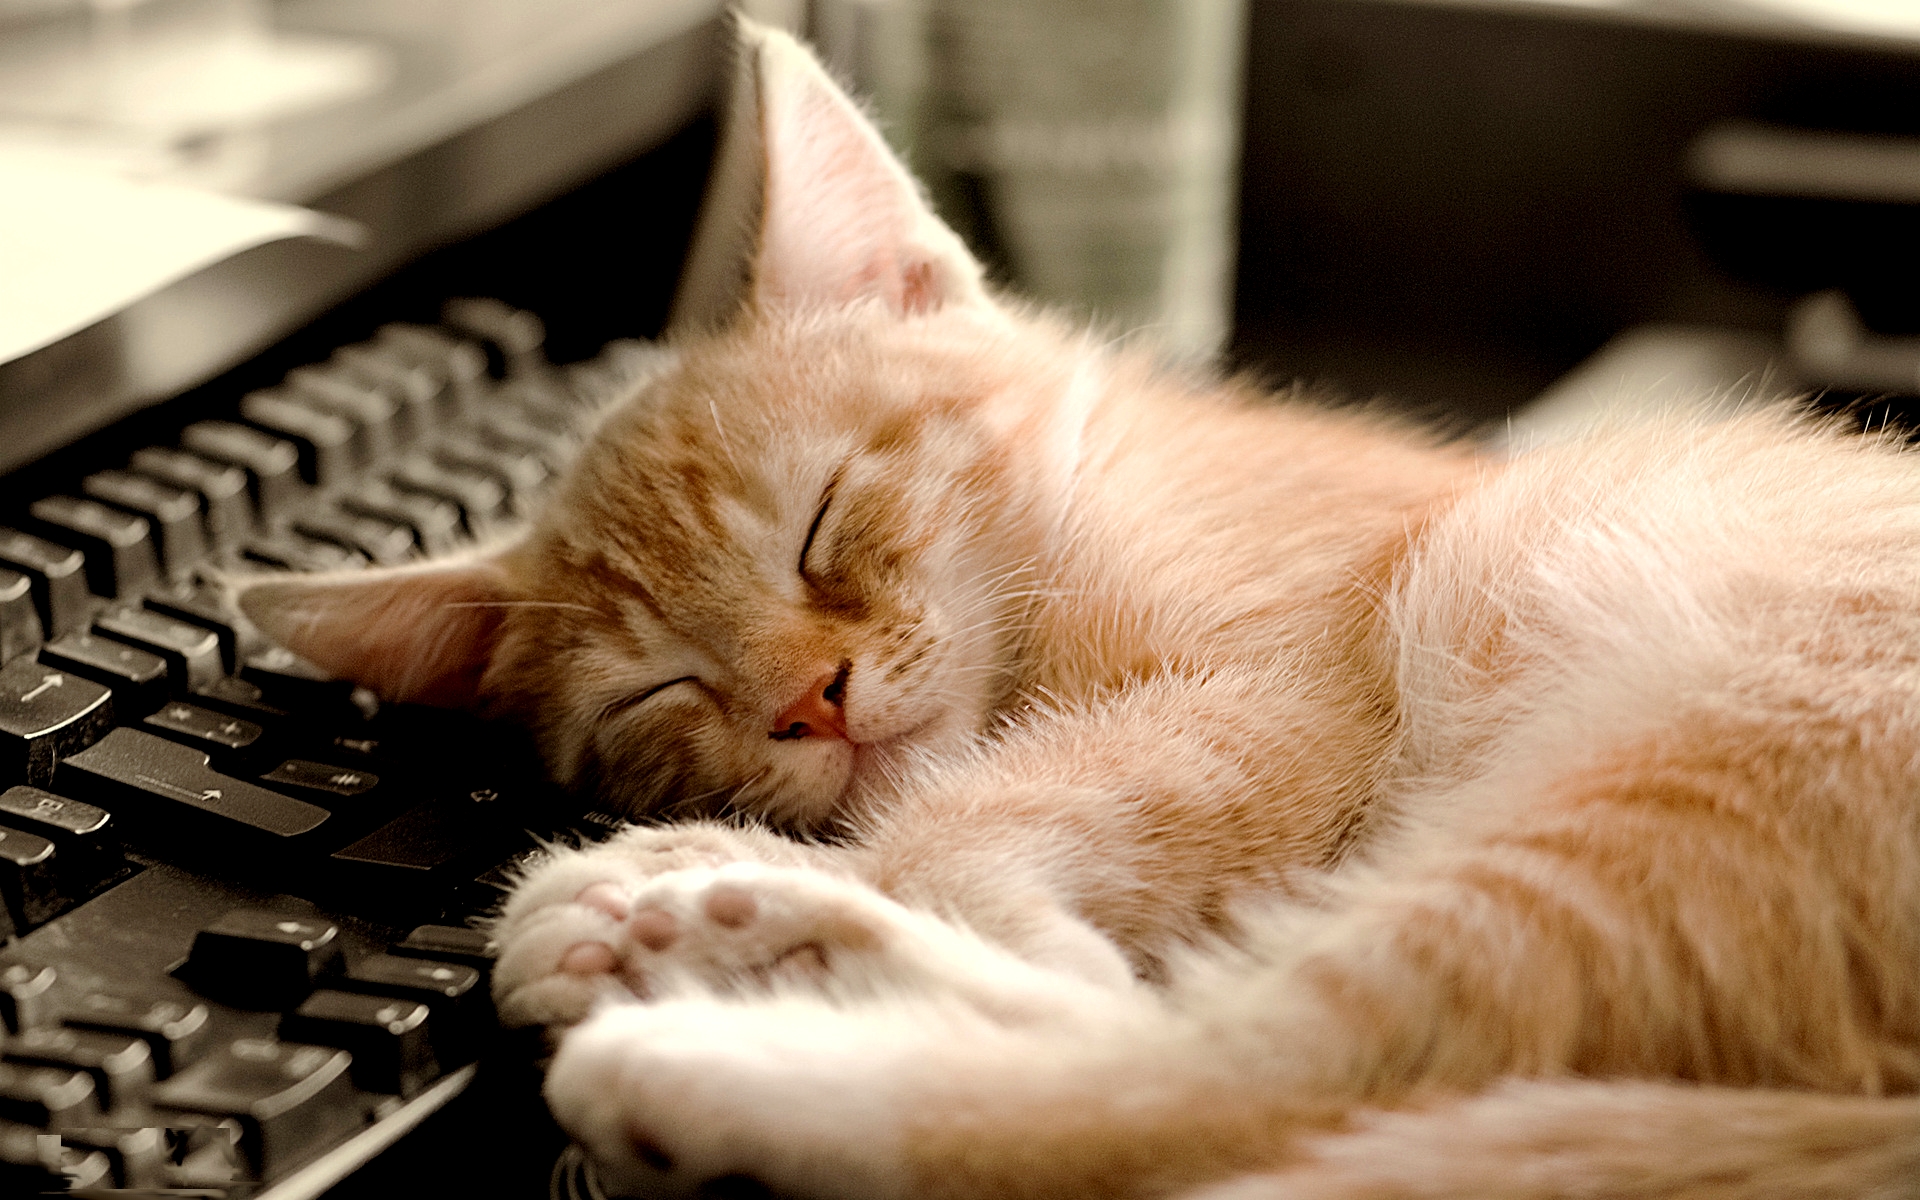 cats_purrfect-cat-nap_technology-kitten-lazy